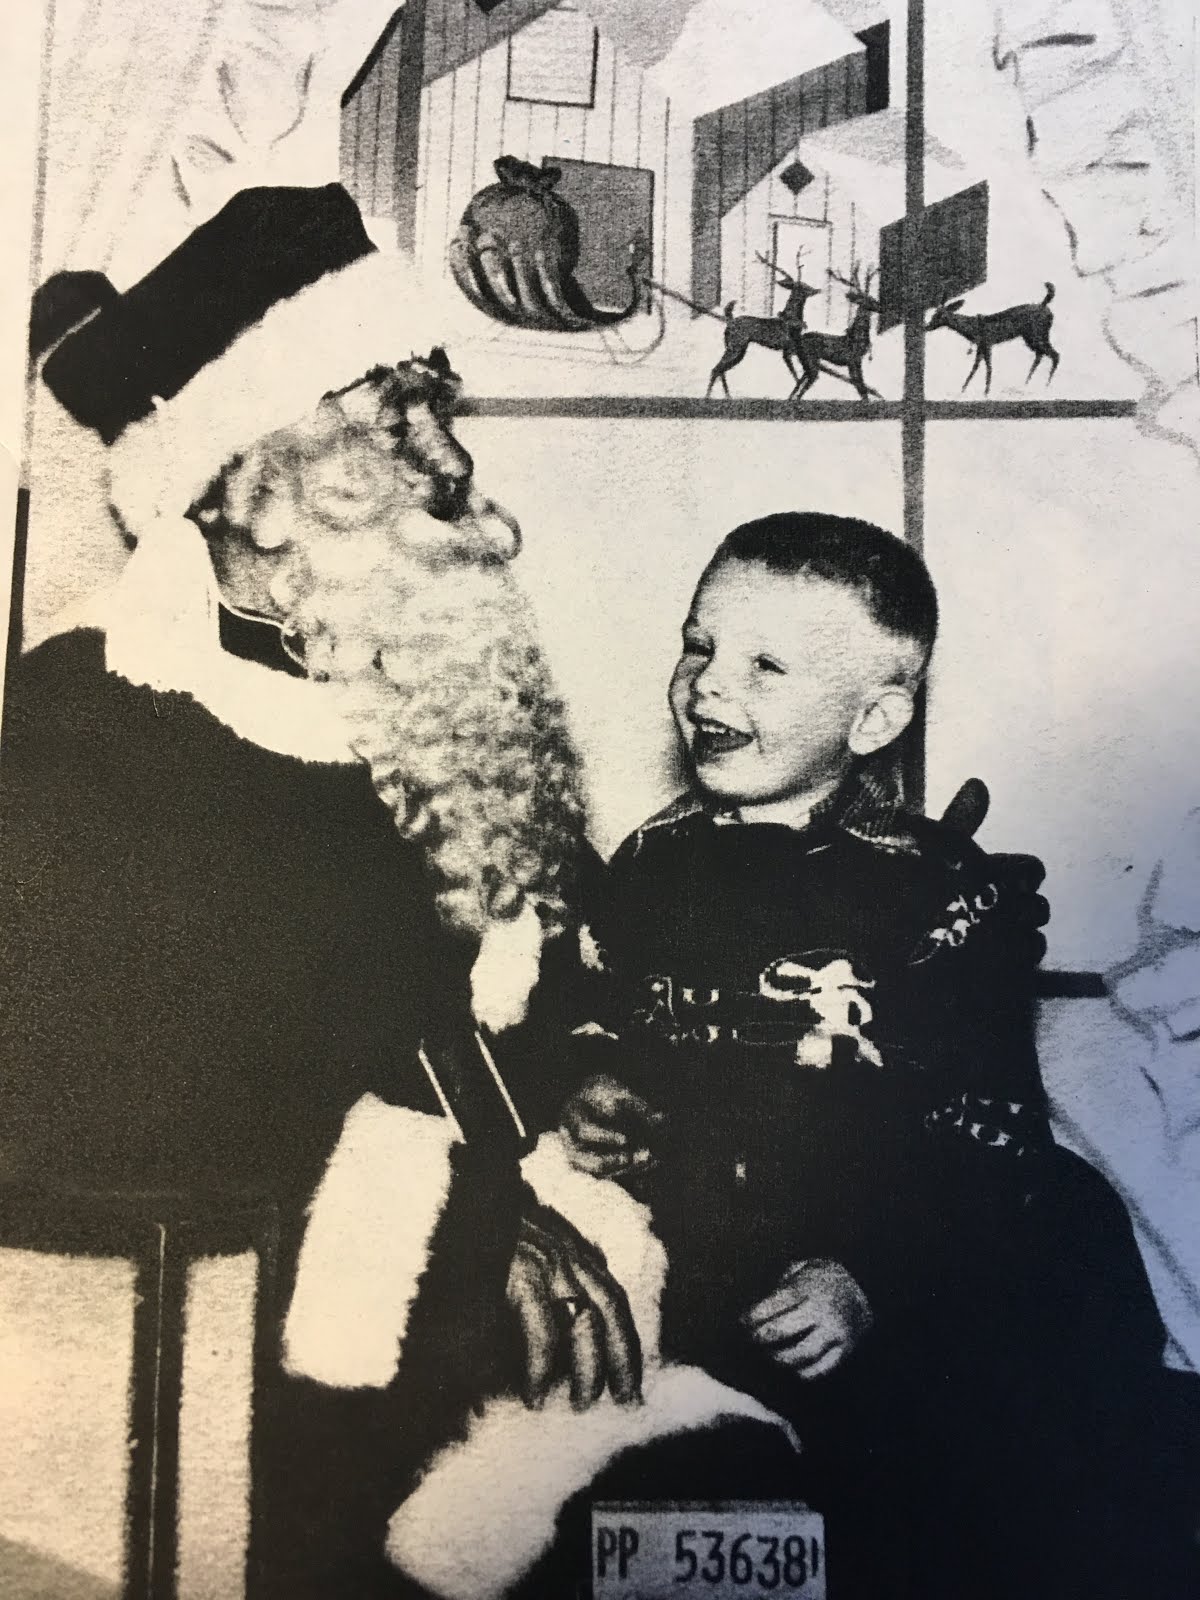 a 1950's Christmas visit with Santa